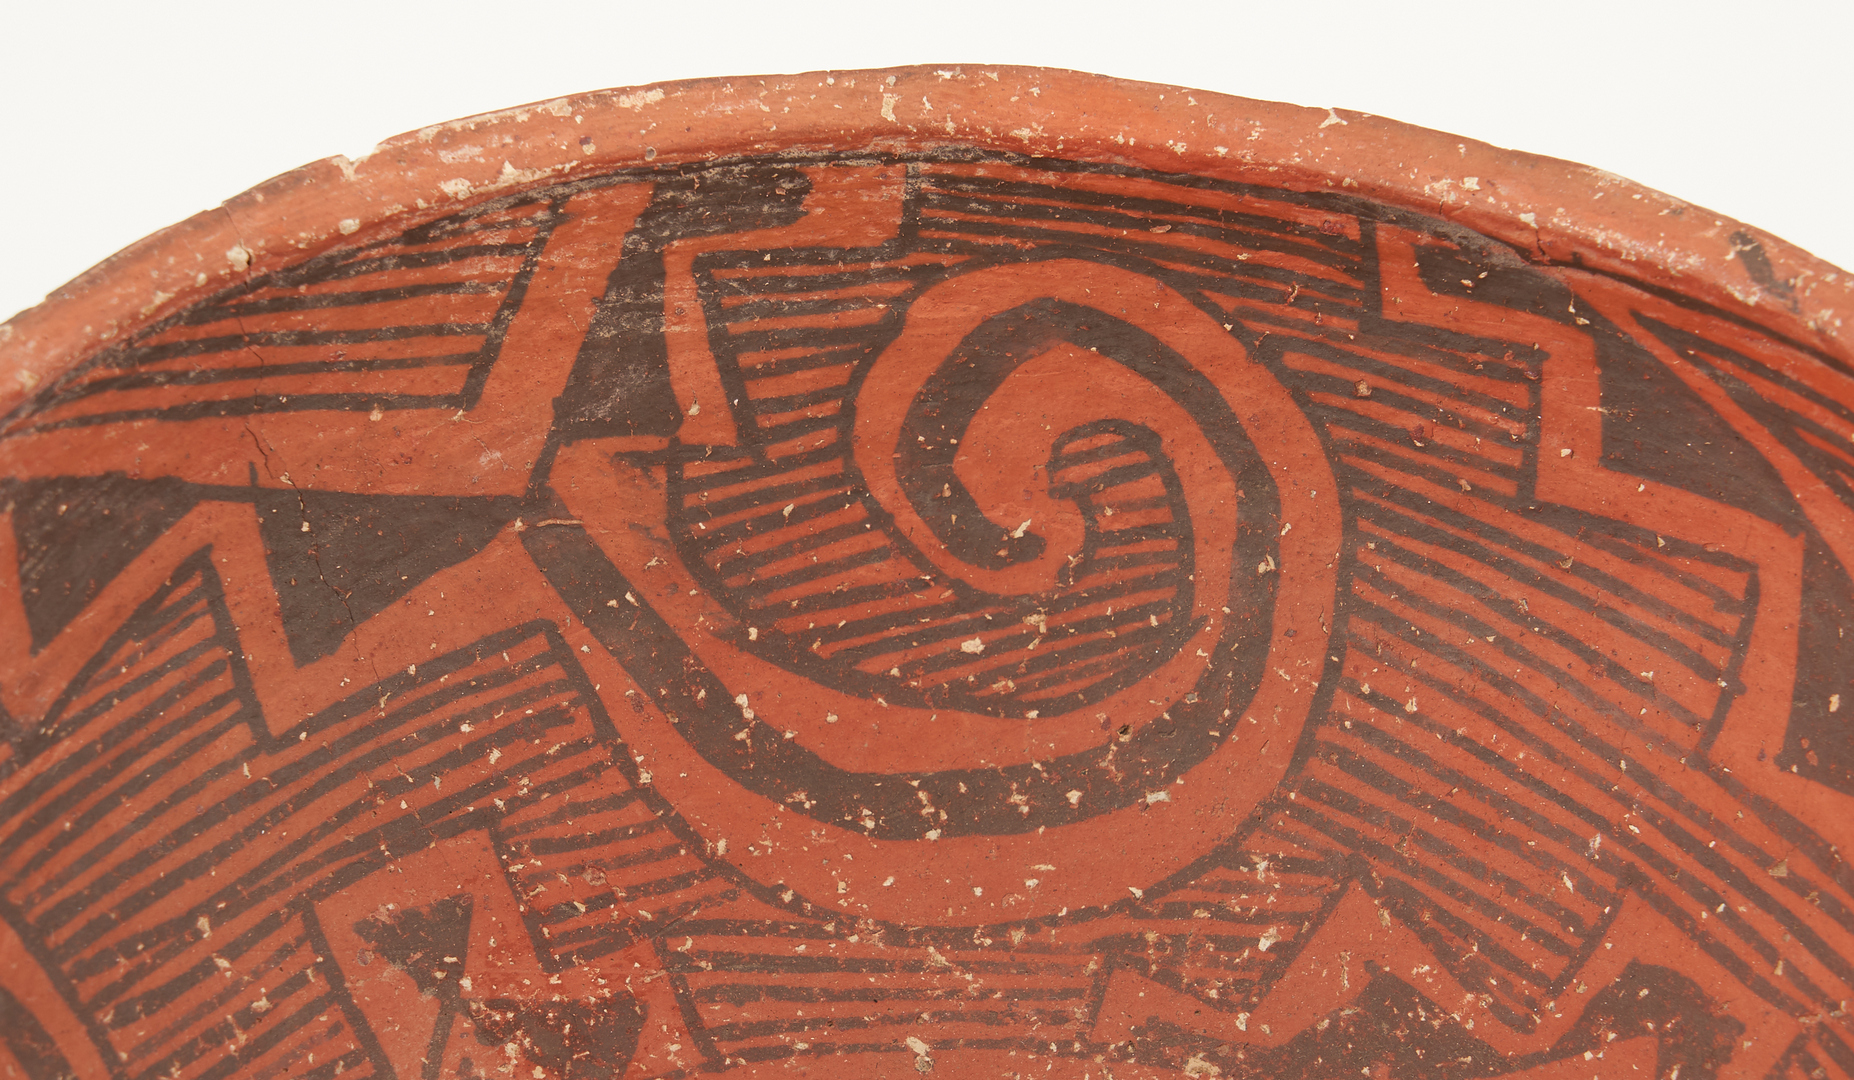 Lot 682: 2 Anasazi Culture Polychrome Bowls